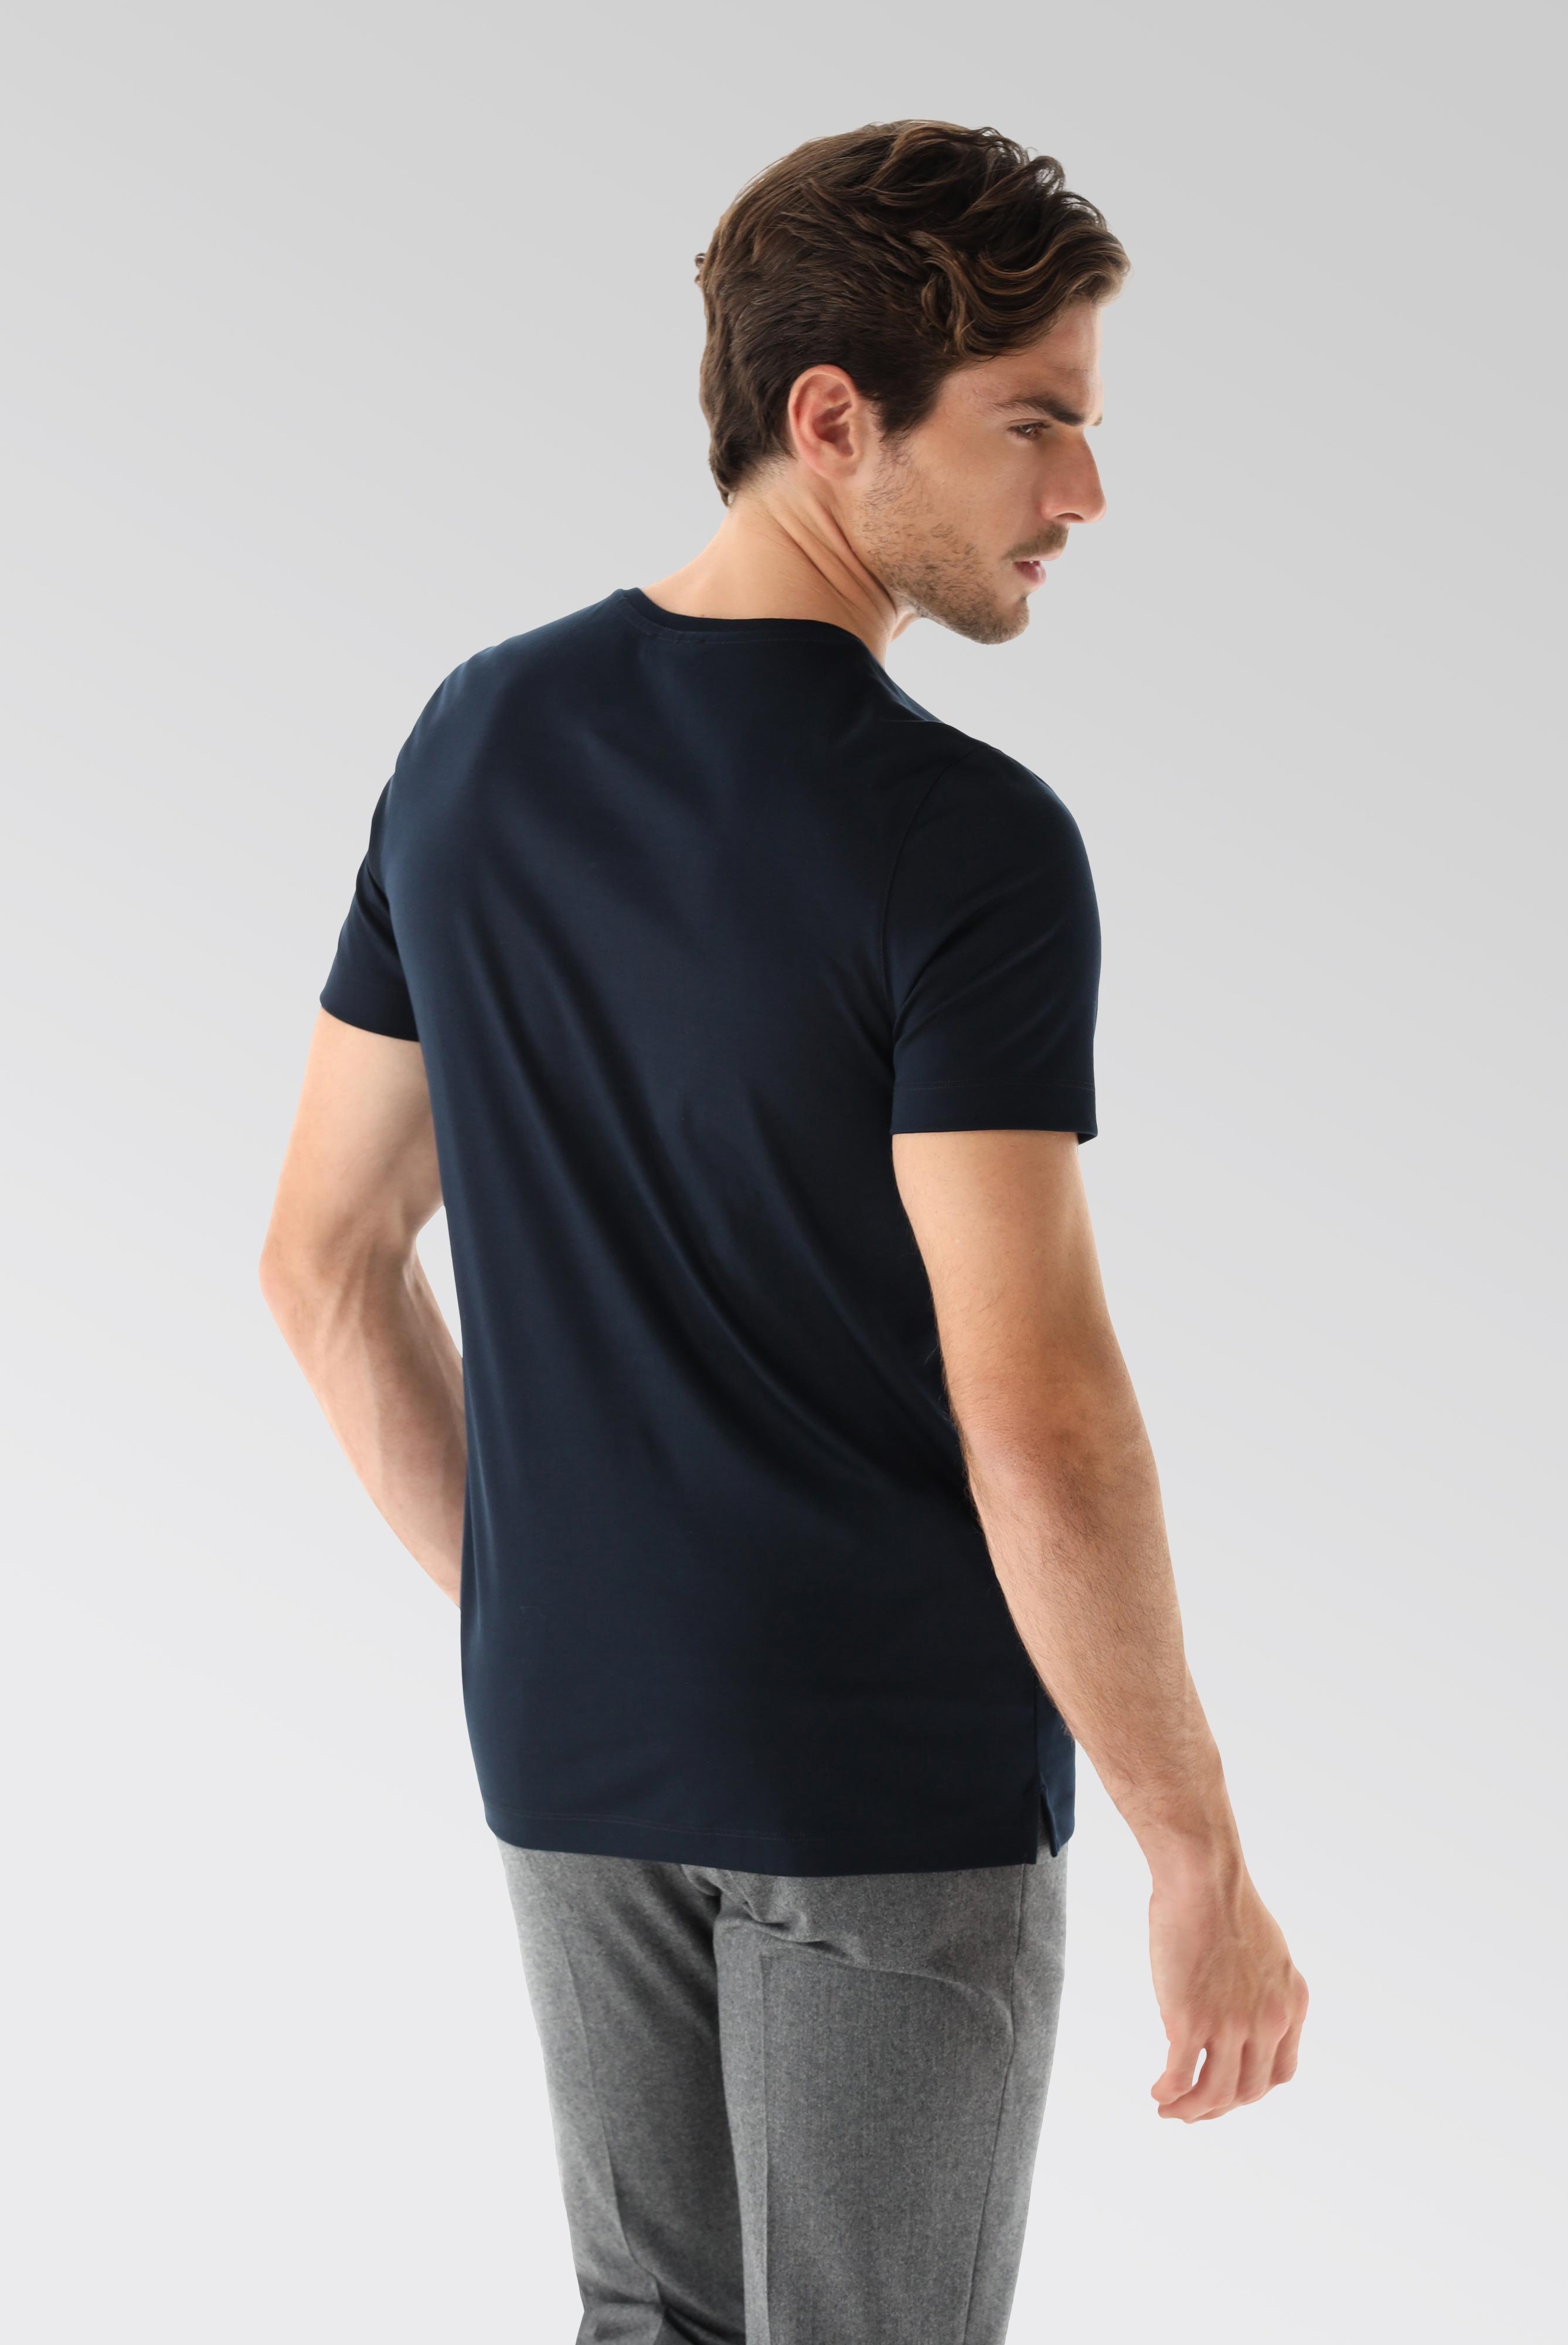 T-Shirts+Swiss Cotton Jersey V-Neck T-Shirt+20.1715.UX.180031.790.X4L